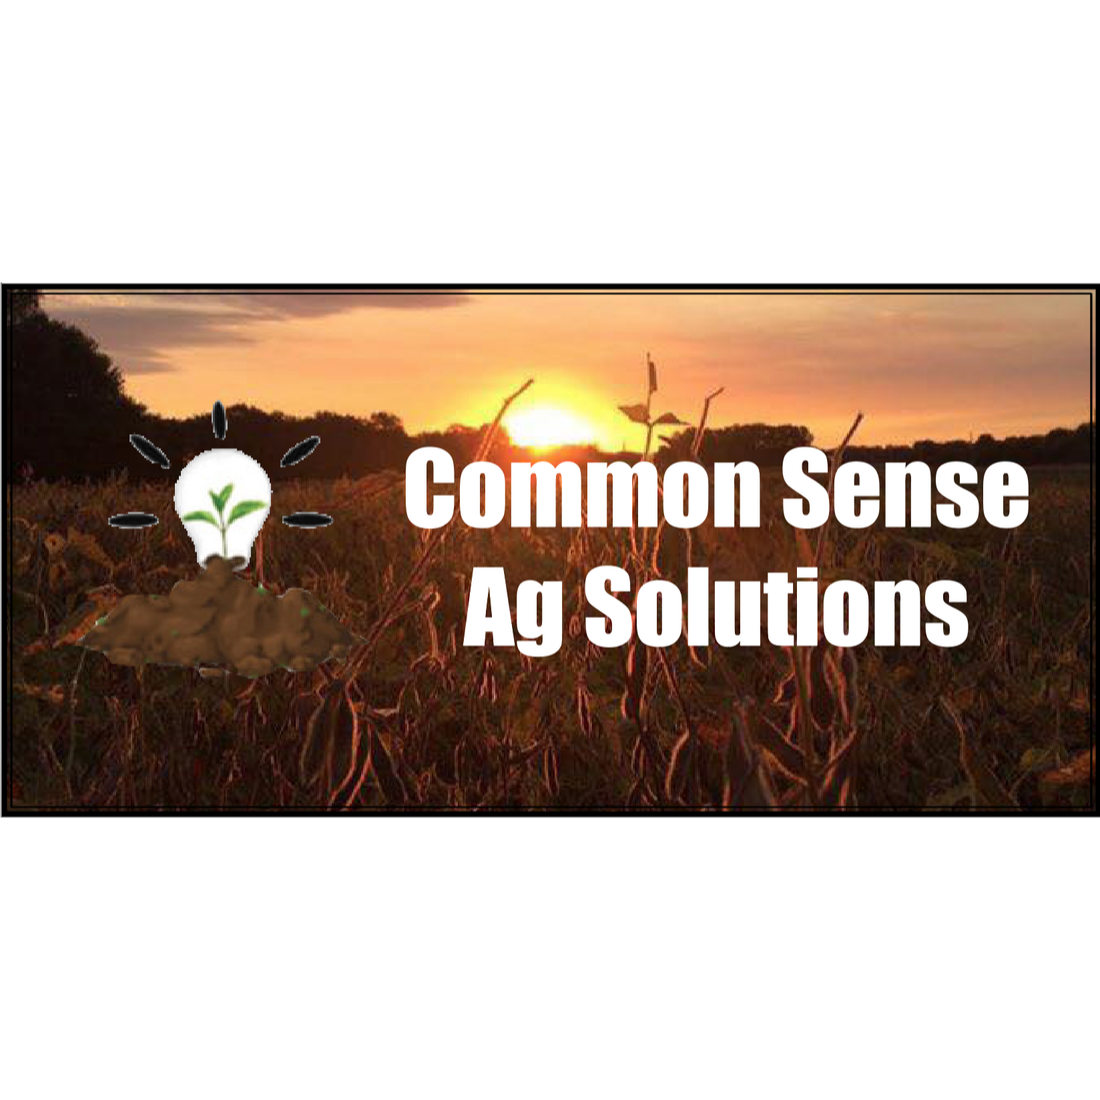 Common Sense Ag Solutions Brunswick (402)929-3665